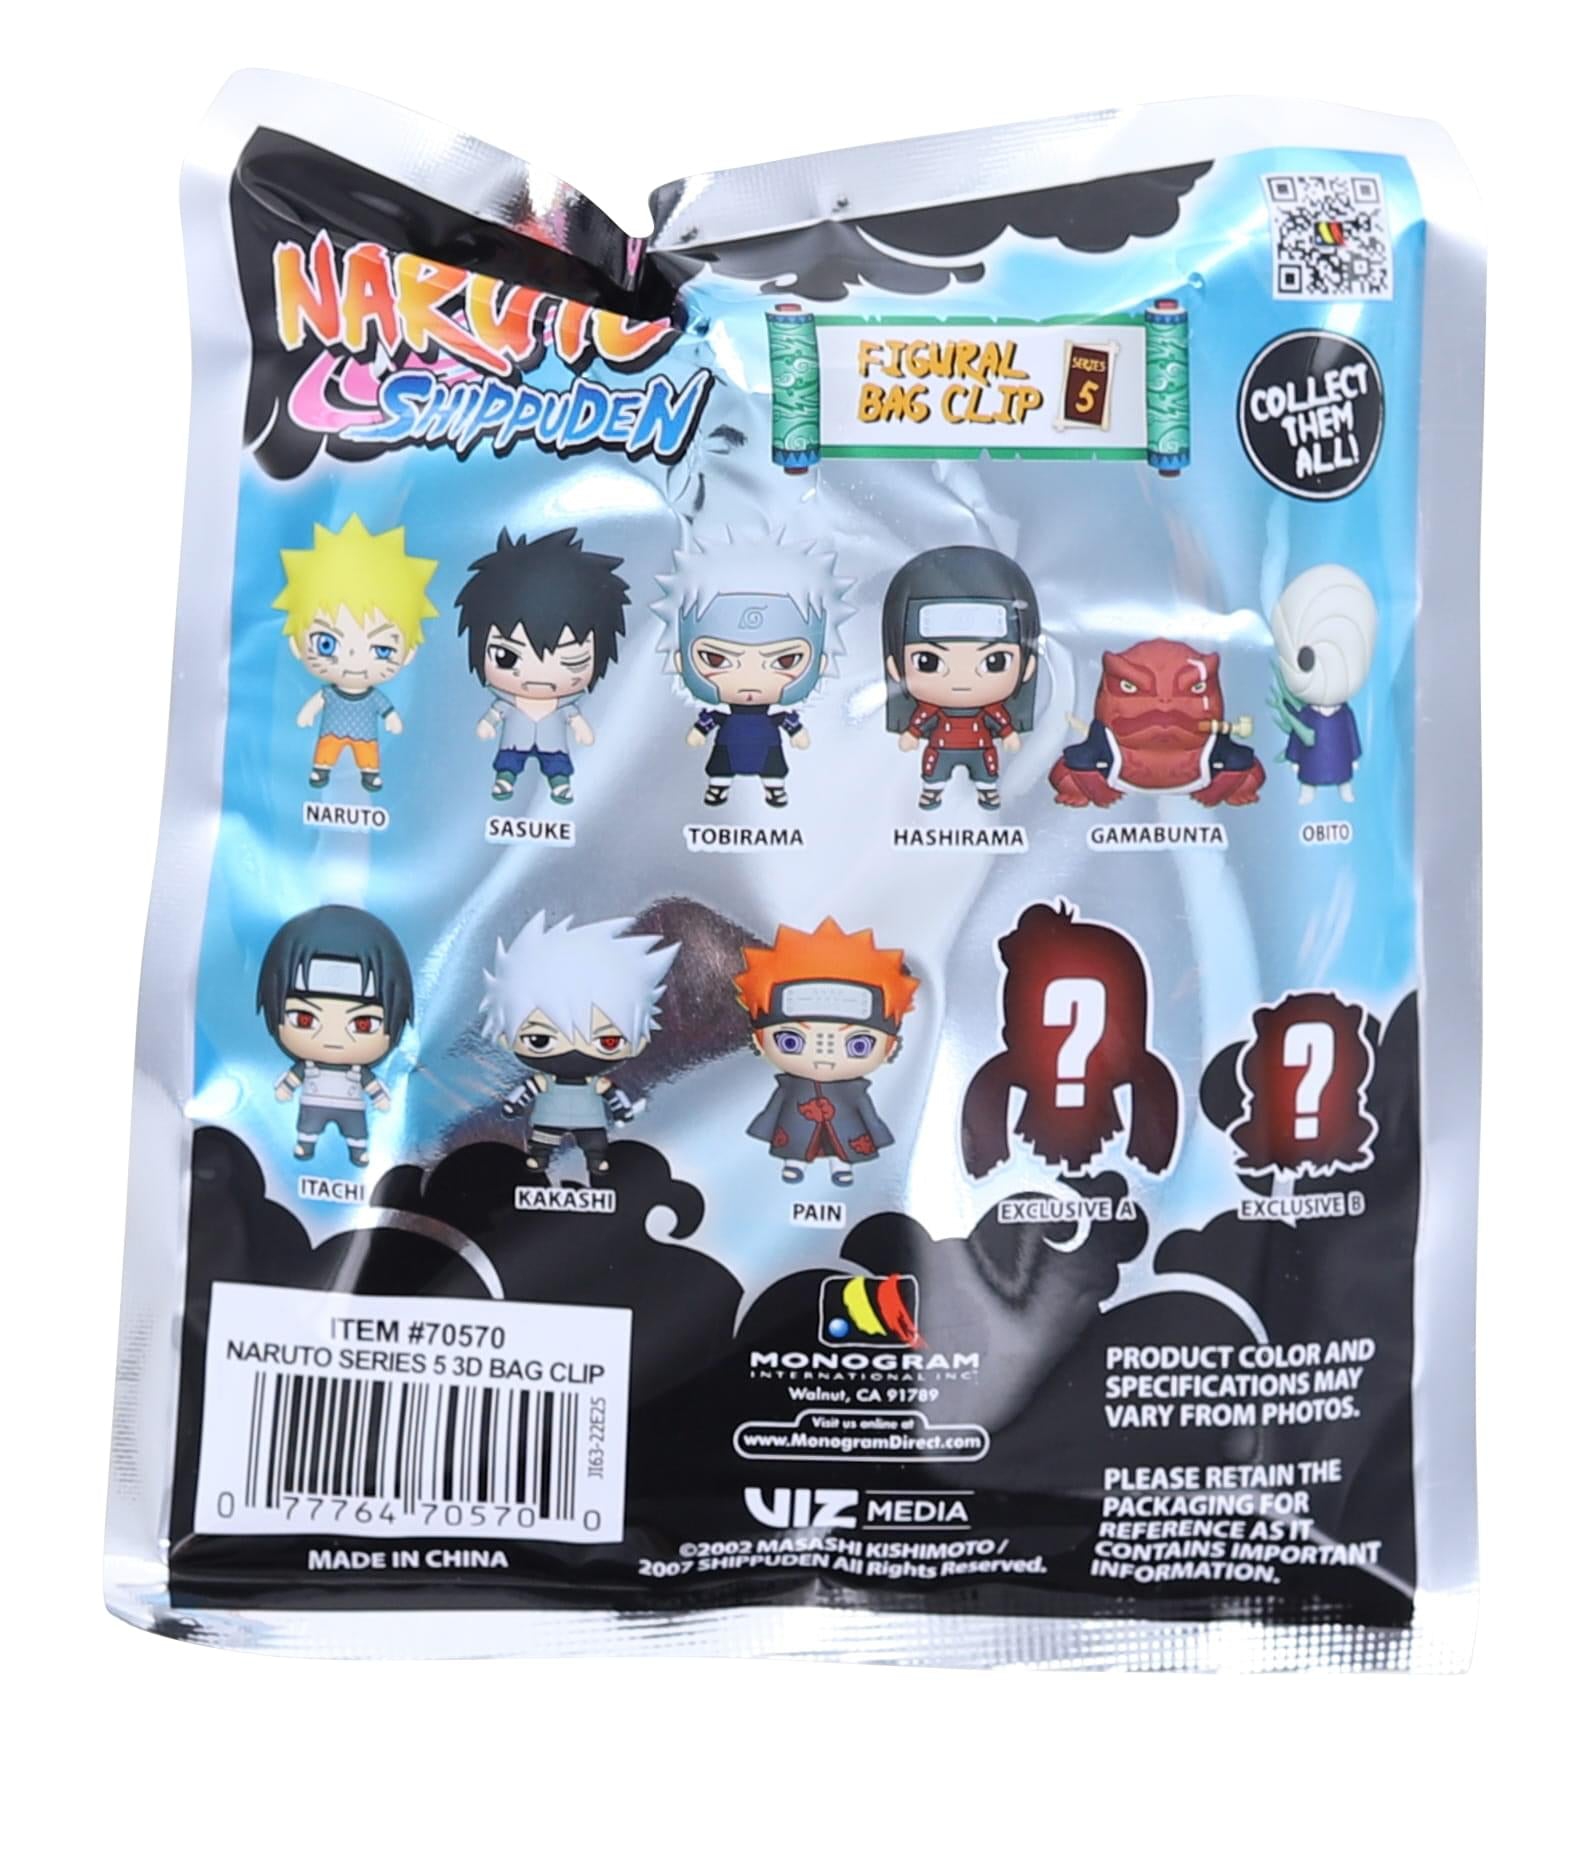 Naruto Shippuden Series 3 3D Foam Bag Clip